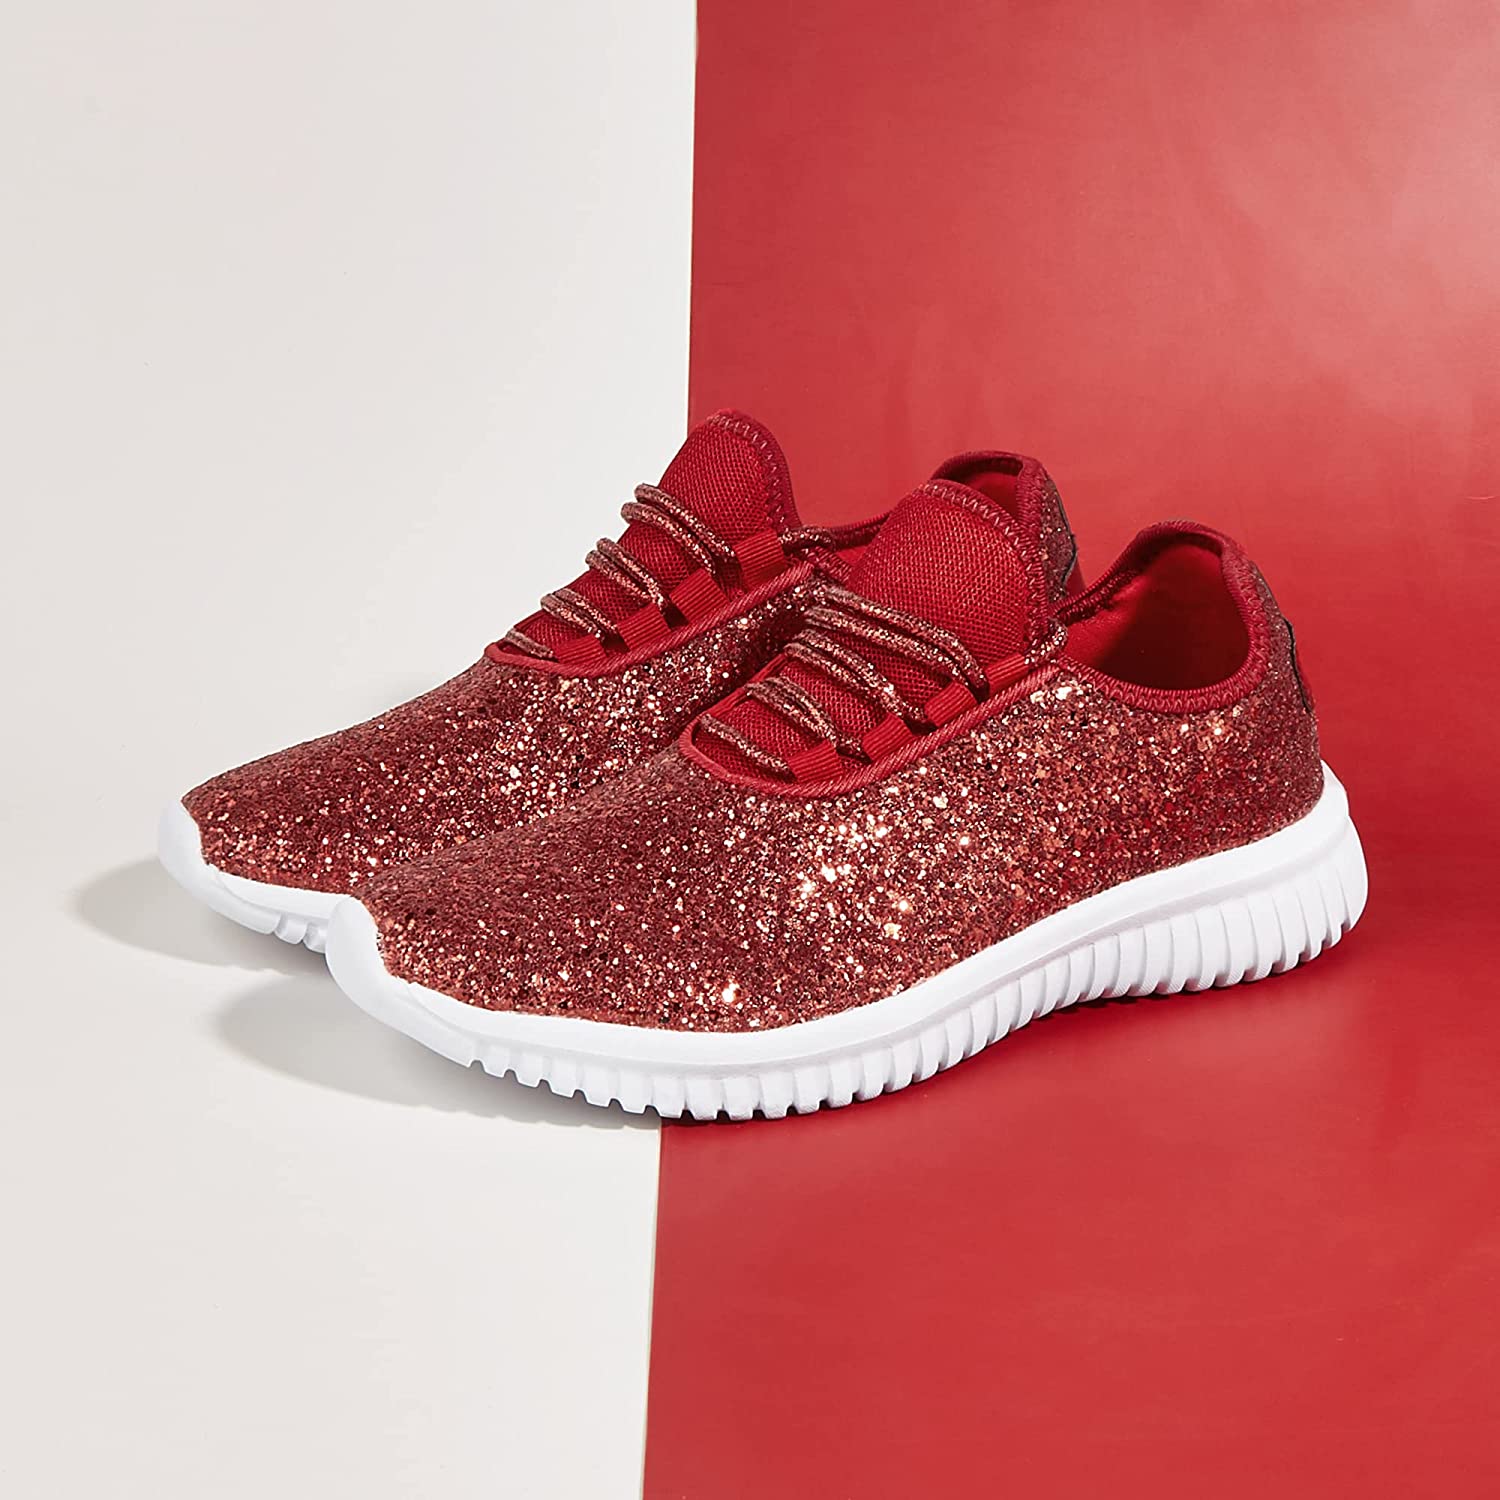 K KIP WOK Fashion Glitter Sneakers for Womens Silp On Running Shoes Lightweigt Tennis Walking Sneakers